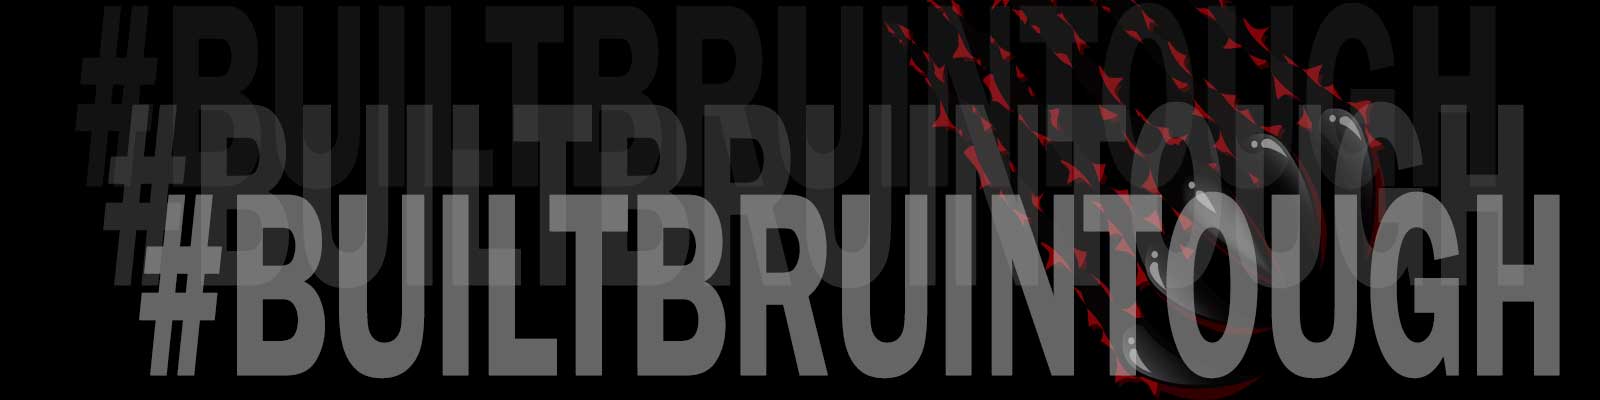 Bruin Outdoors - Built Bruin Tough